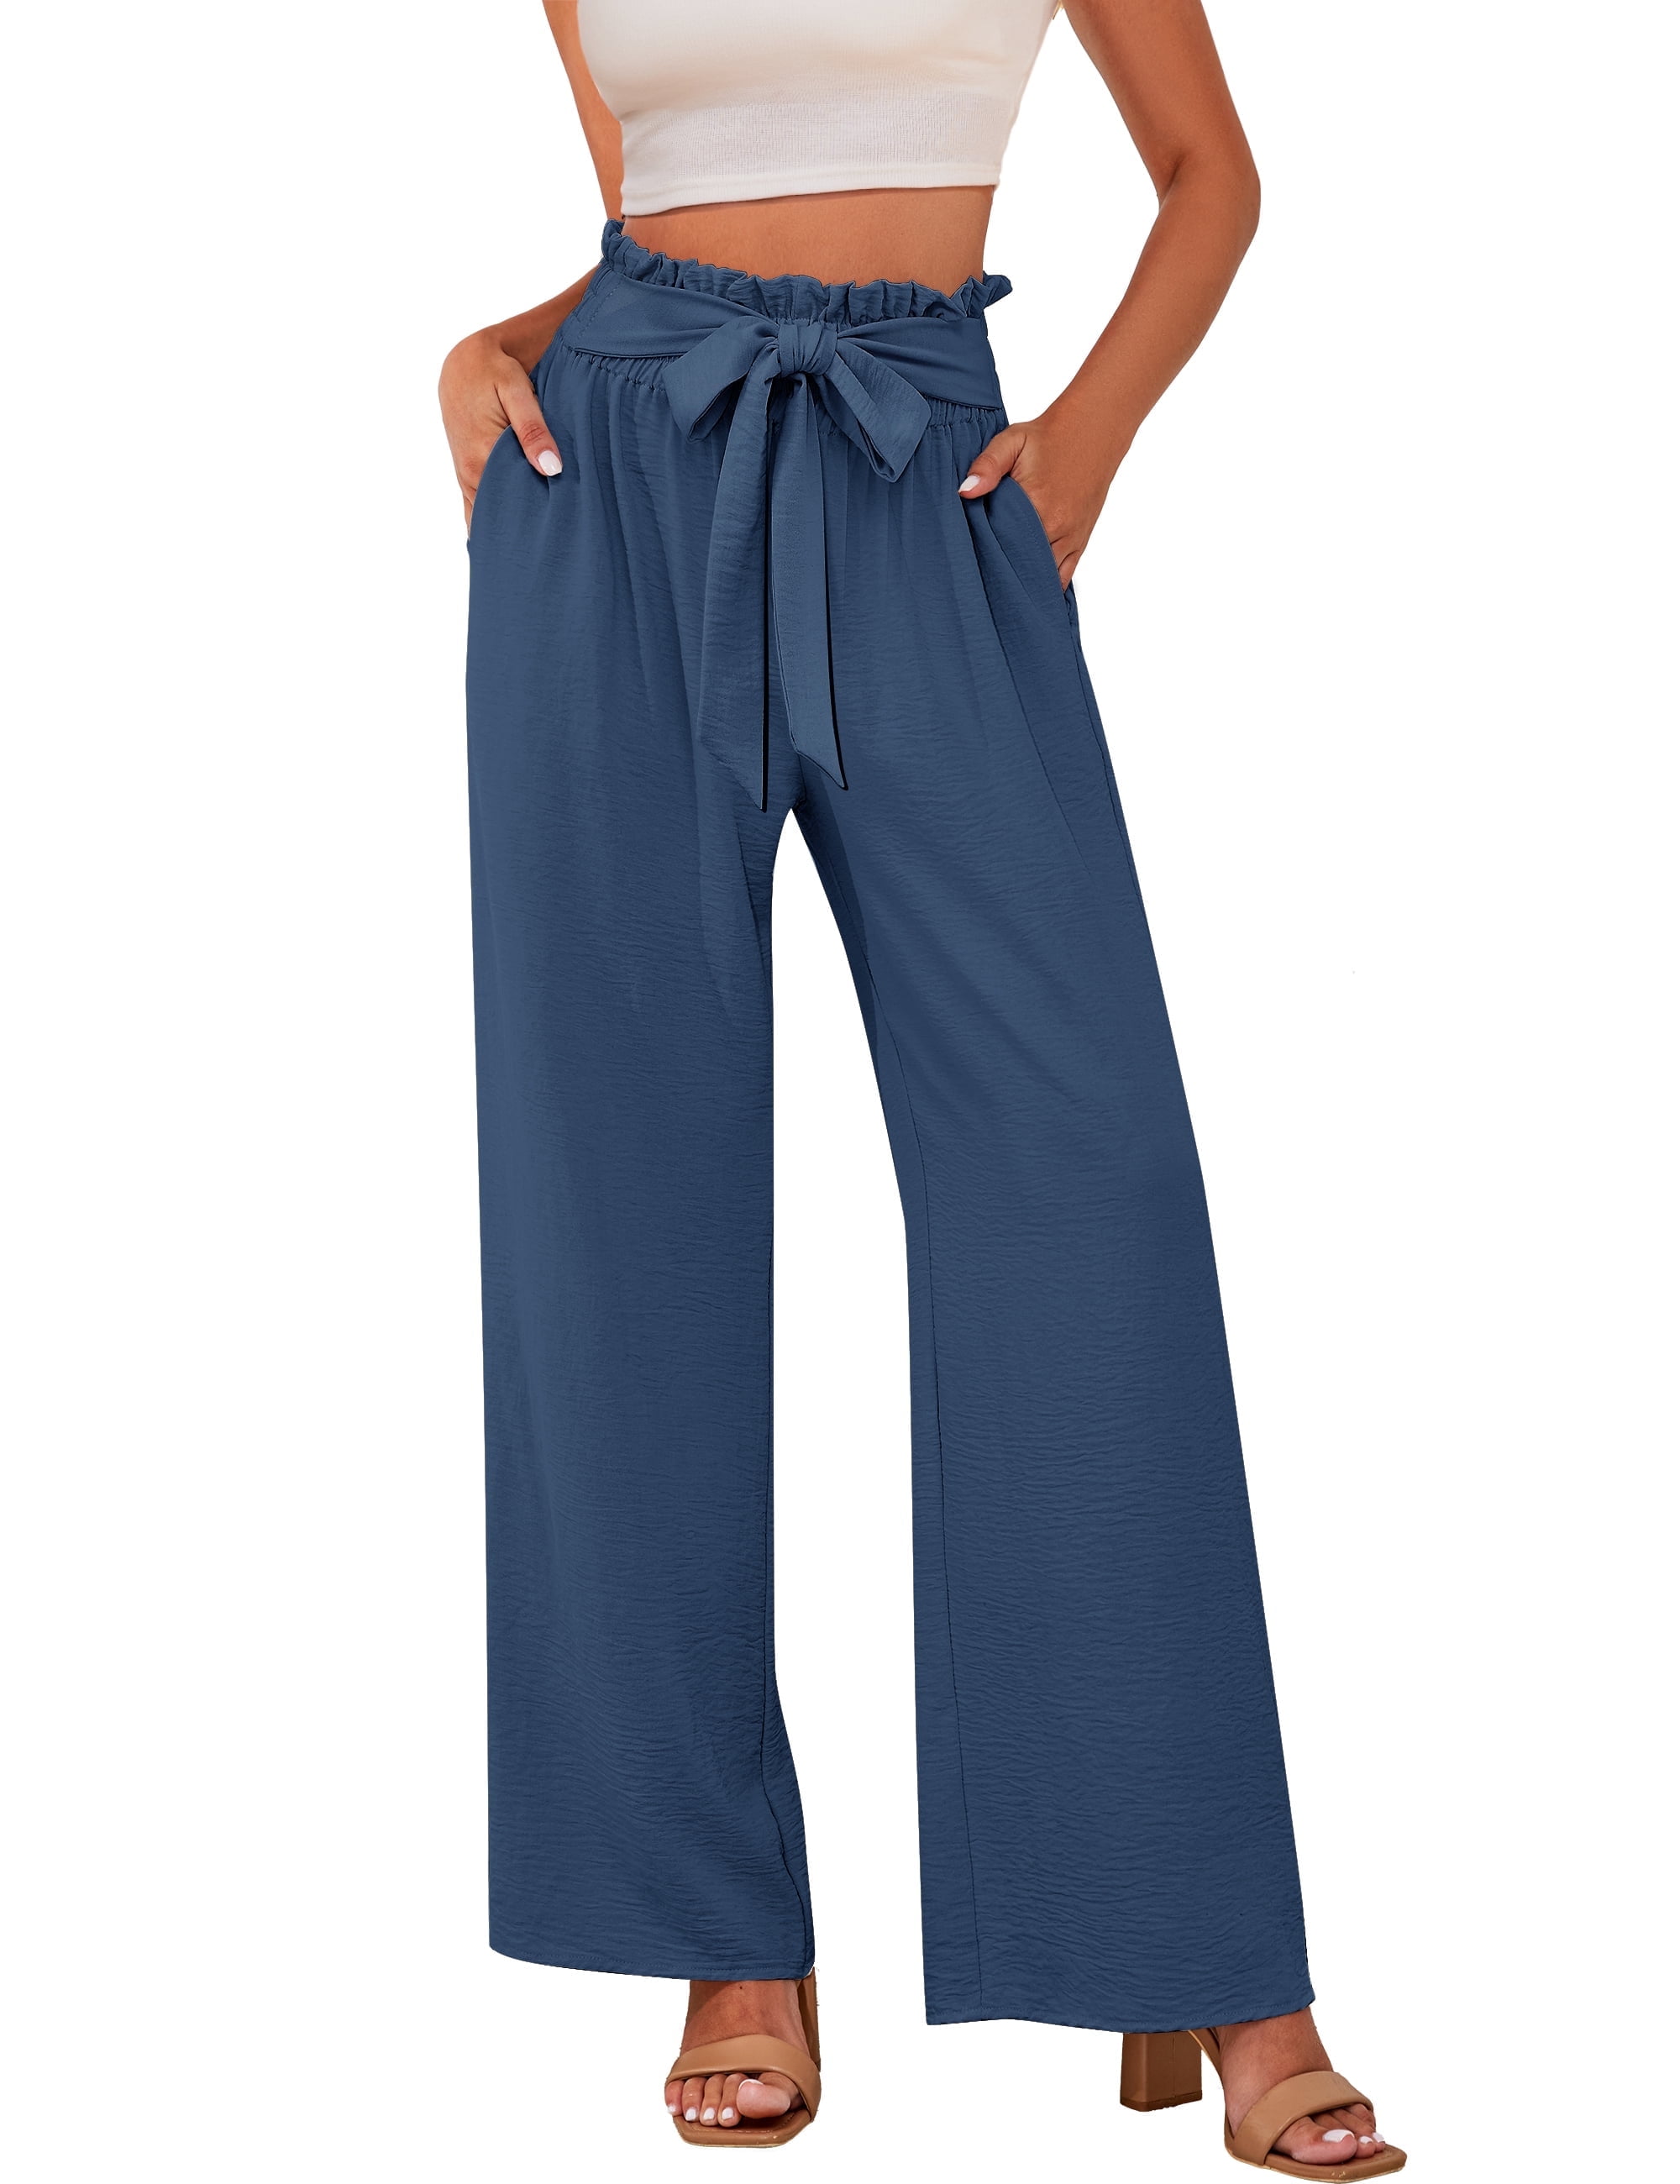 eczipvz Sweat Pants for Womens Women's High Waisted Plicated Knot Hem Pants  Zipper Fly Joggers Trousers with Pockets Green,XL - Walmart.com